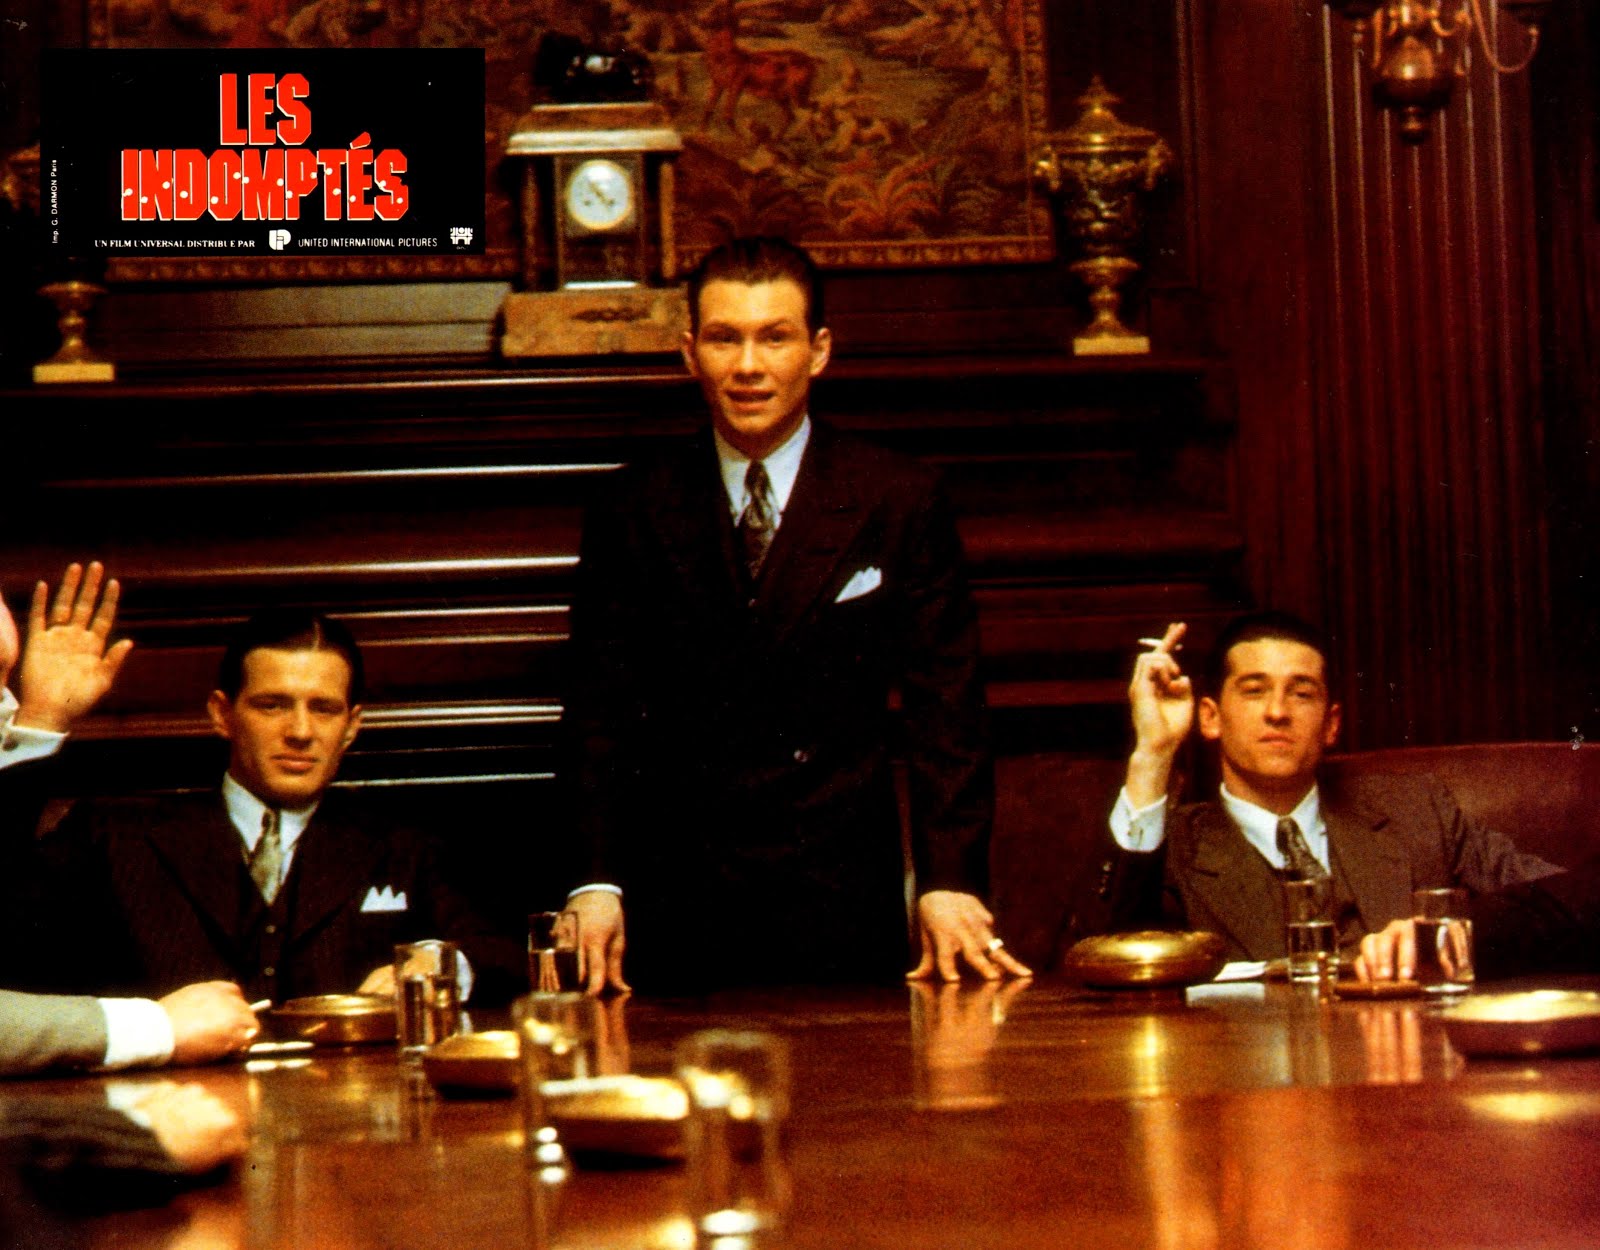 Les indomptés (1991) Michael Karbelnikoff - Mobsters / The evil empire (10.12.1990 / 22.03.1991)